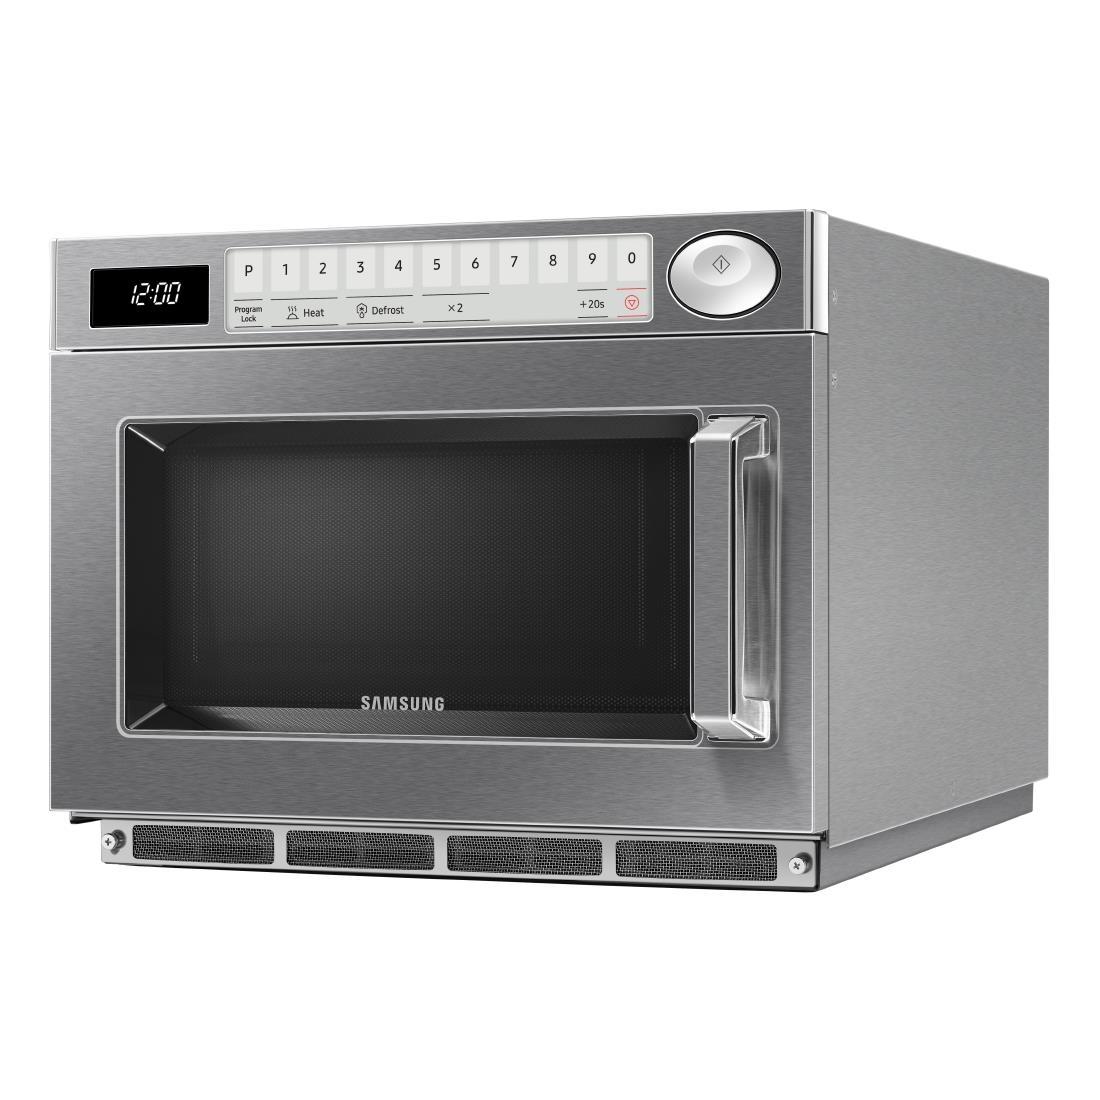 Samsung Commercial Microwave Digital 26Ltr 1850W - FS316  - 2